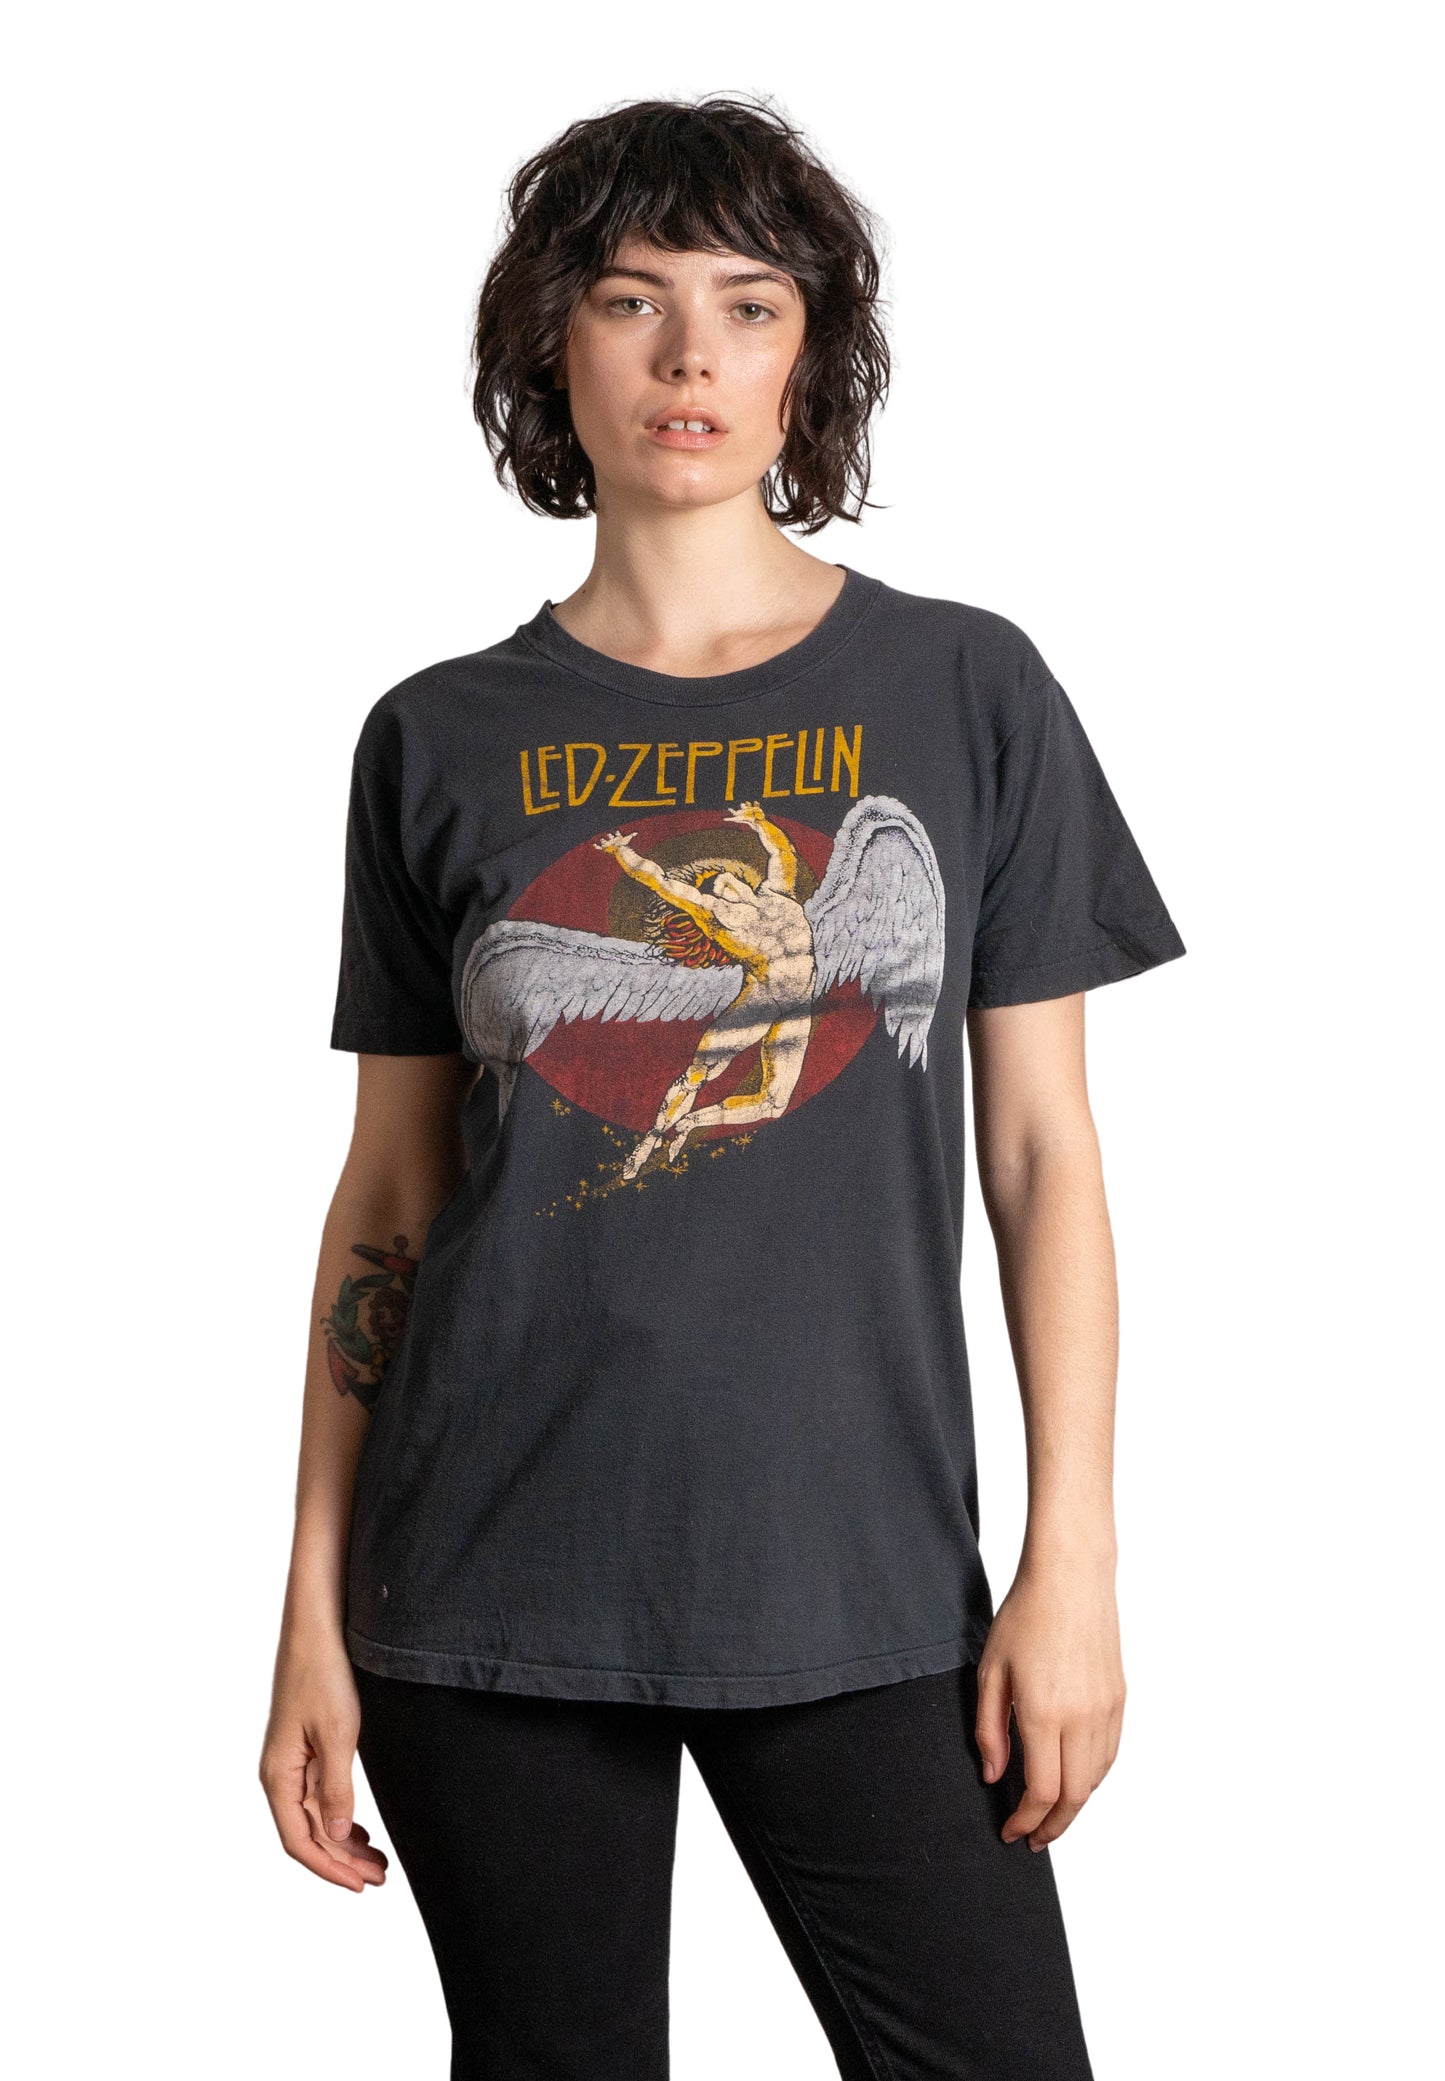 Vintage 1970’s Led Zeppelin T-Shirt